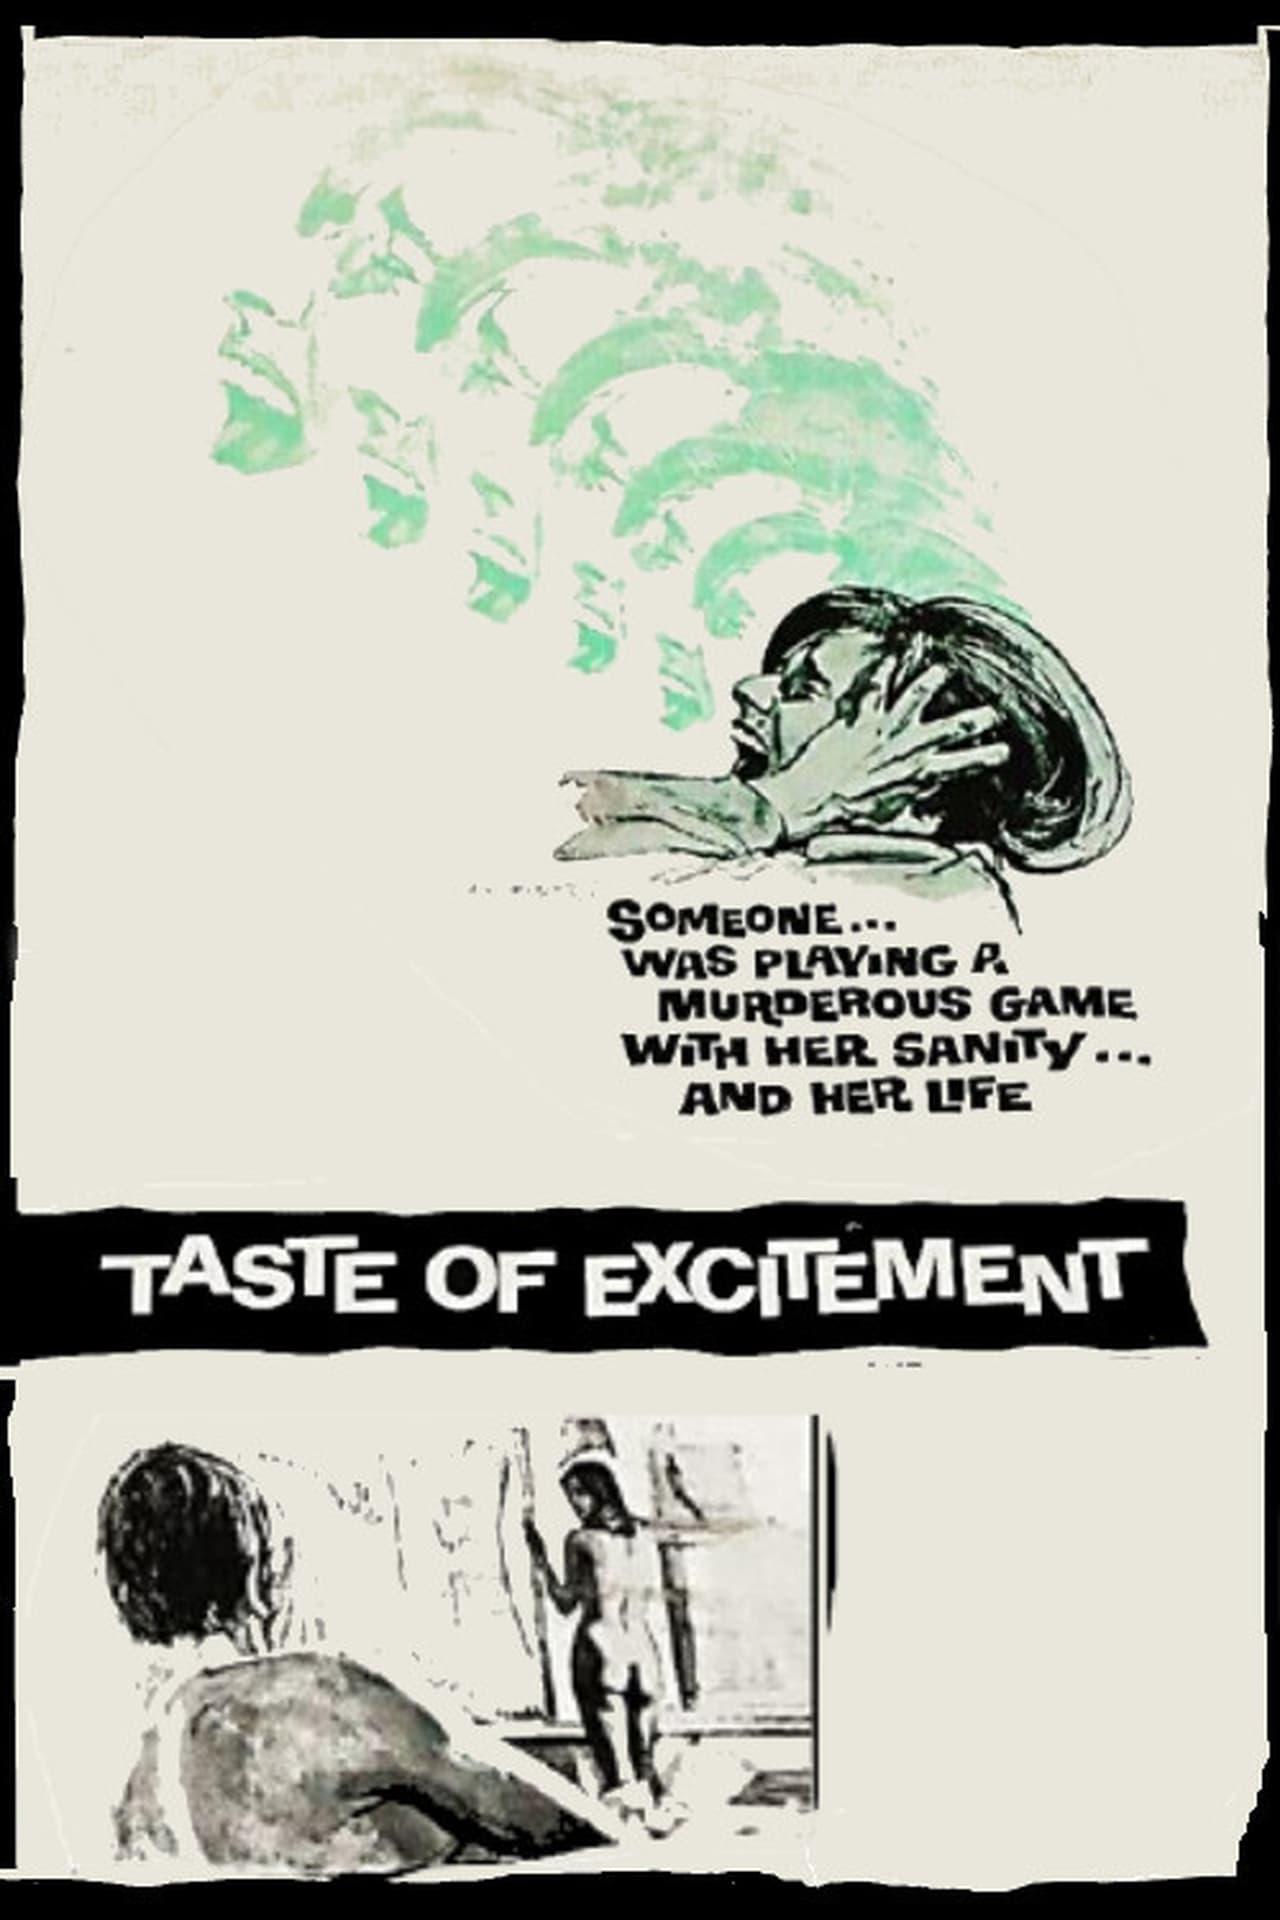 Taste of Excitement poster